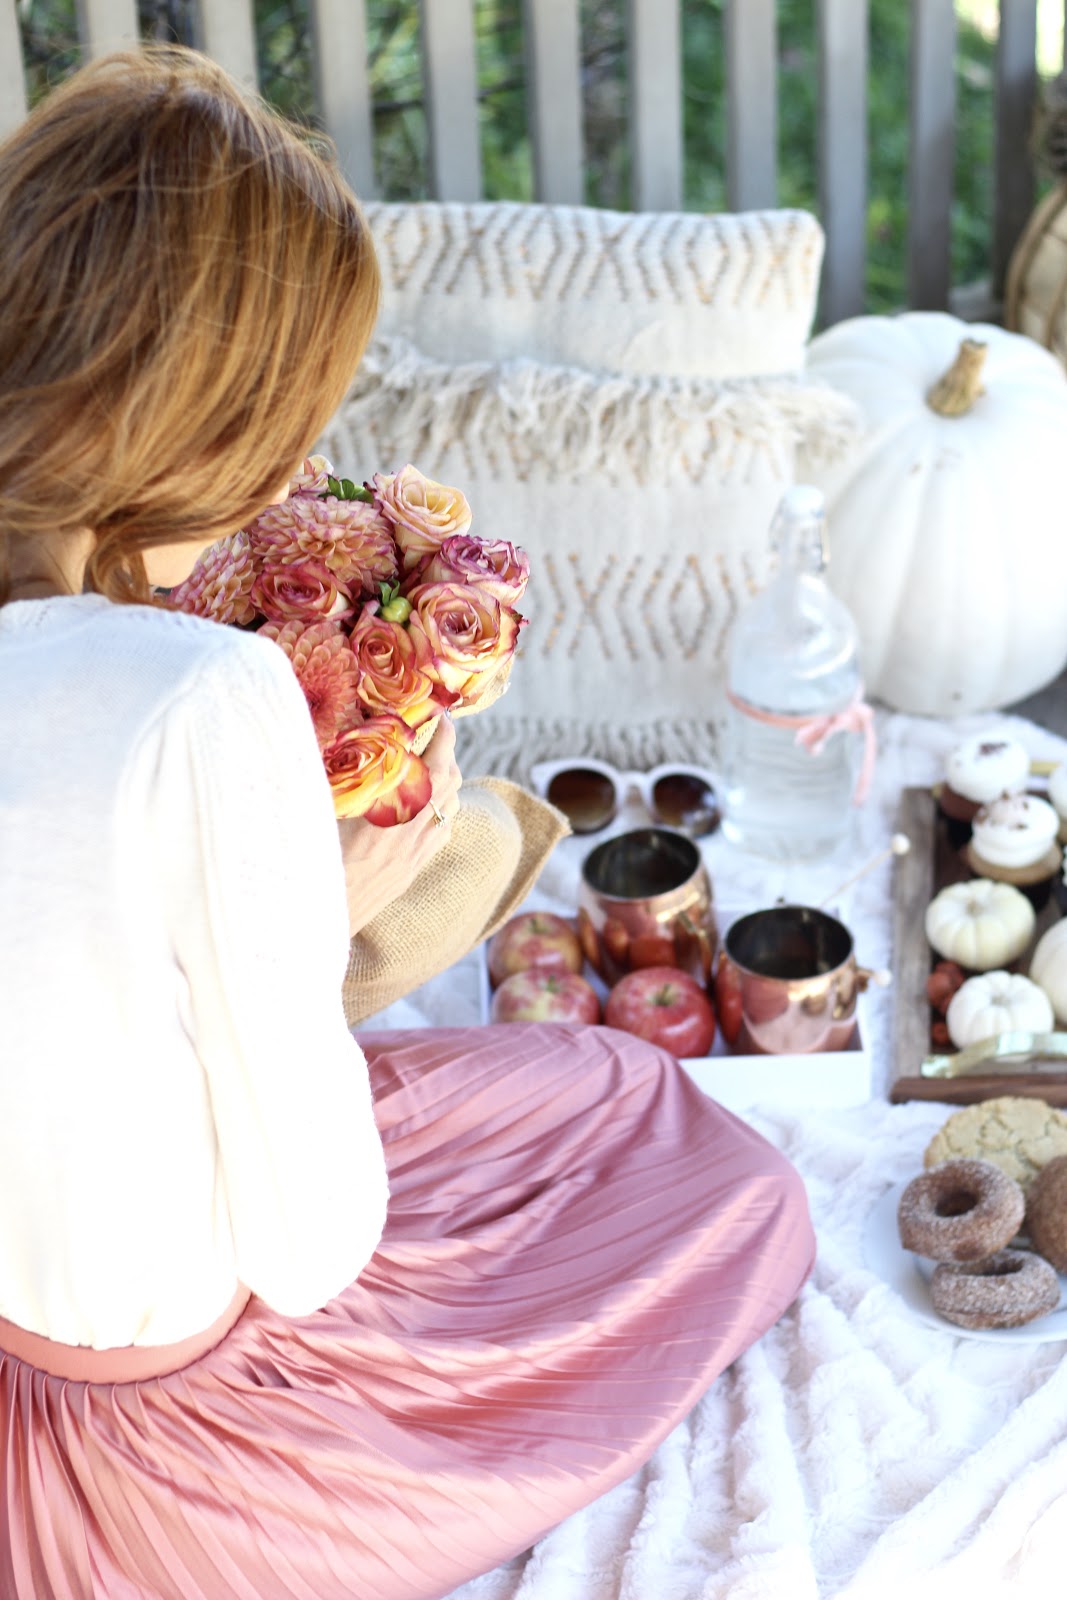 Kelly's Bake Shoppe- Ontario gluten free vegan bakery, Thanksgiving Picnic for two, picnic essentials 